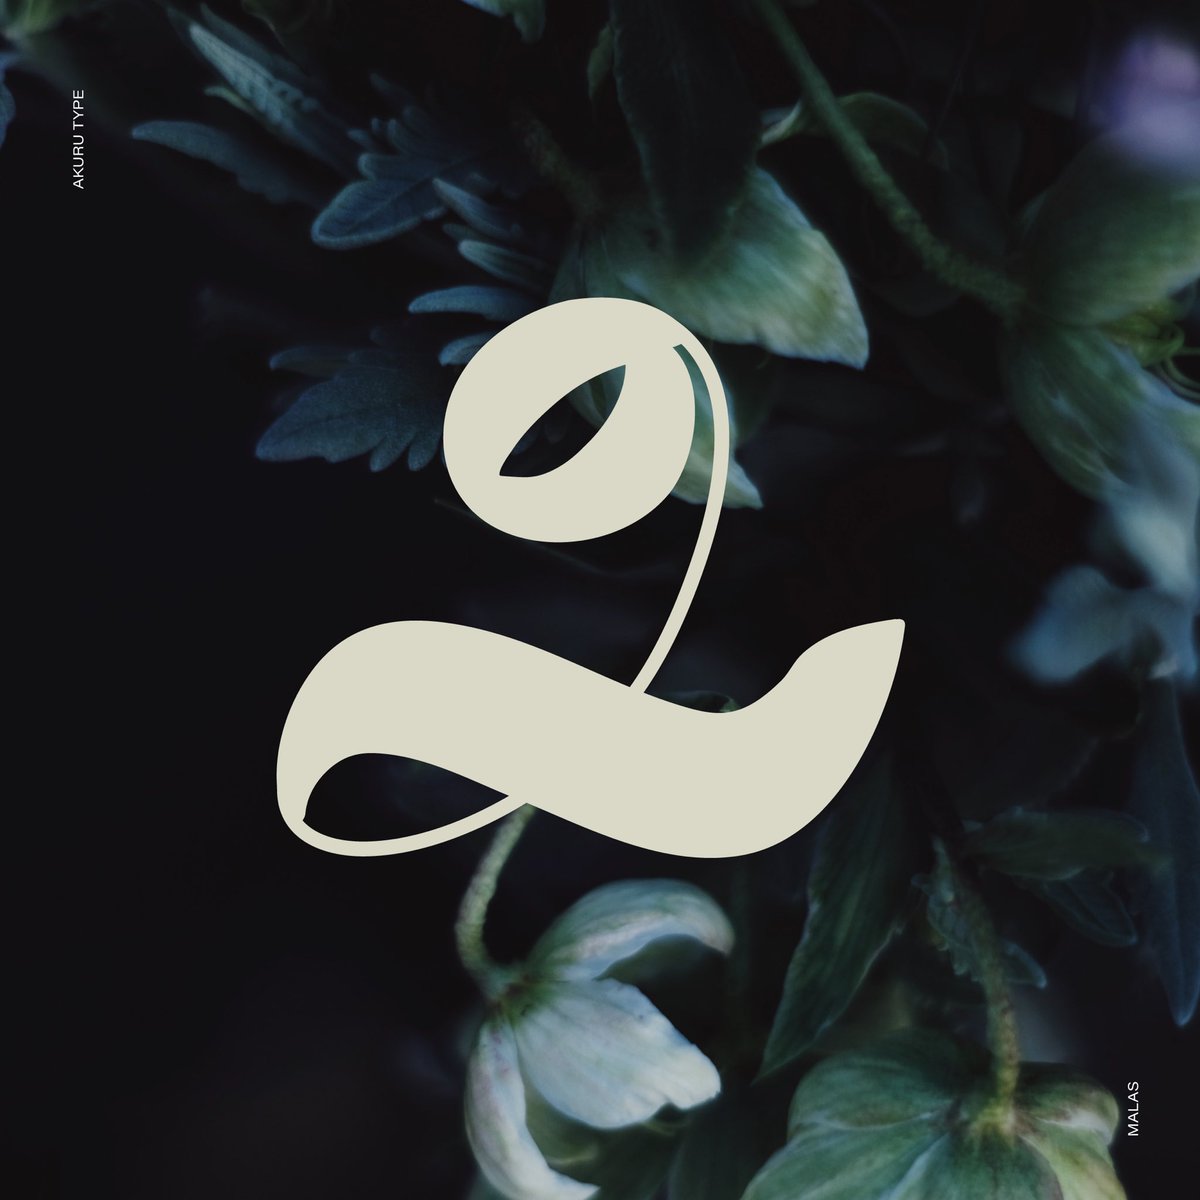 Seen-Sukun ligature. ✨
.
.
.
.
.
.
#typedesign #akurutype #thaana #fonts #typefoundry #dhivehi #thaana #thedailytype #Seenu #ligatures #ligaturecollective #showusyourtype #designspiration #typewip #designinspiration #typematters